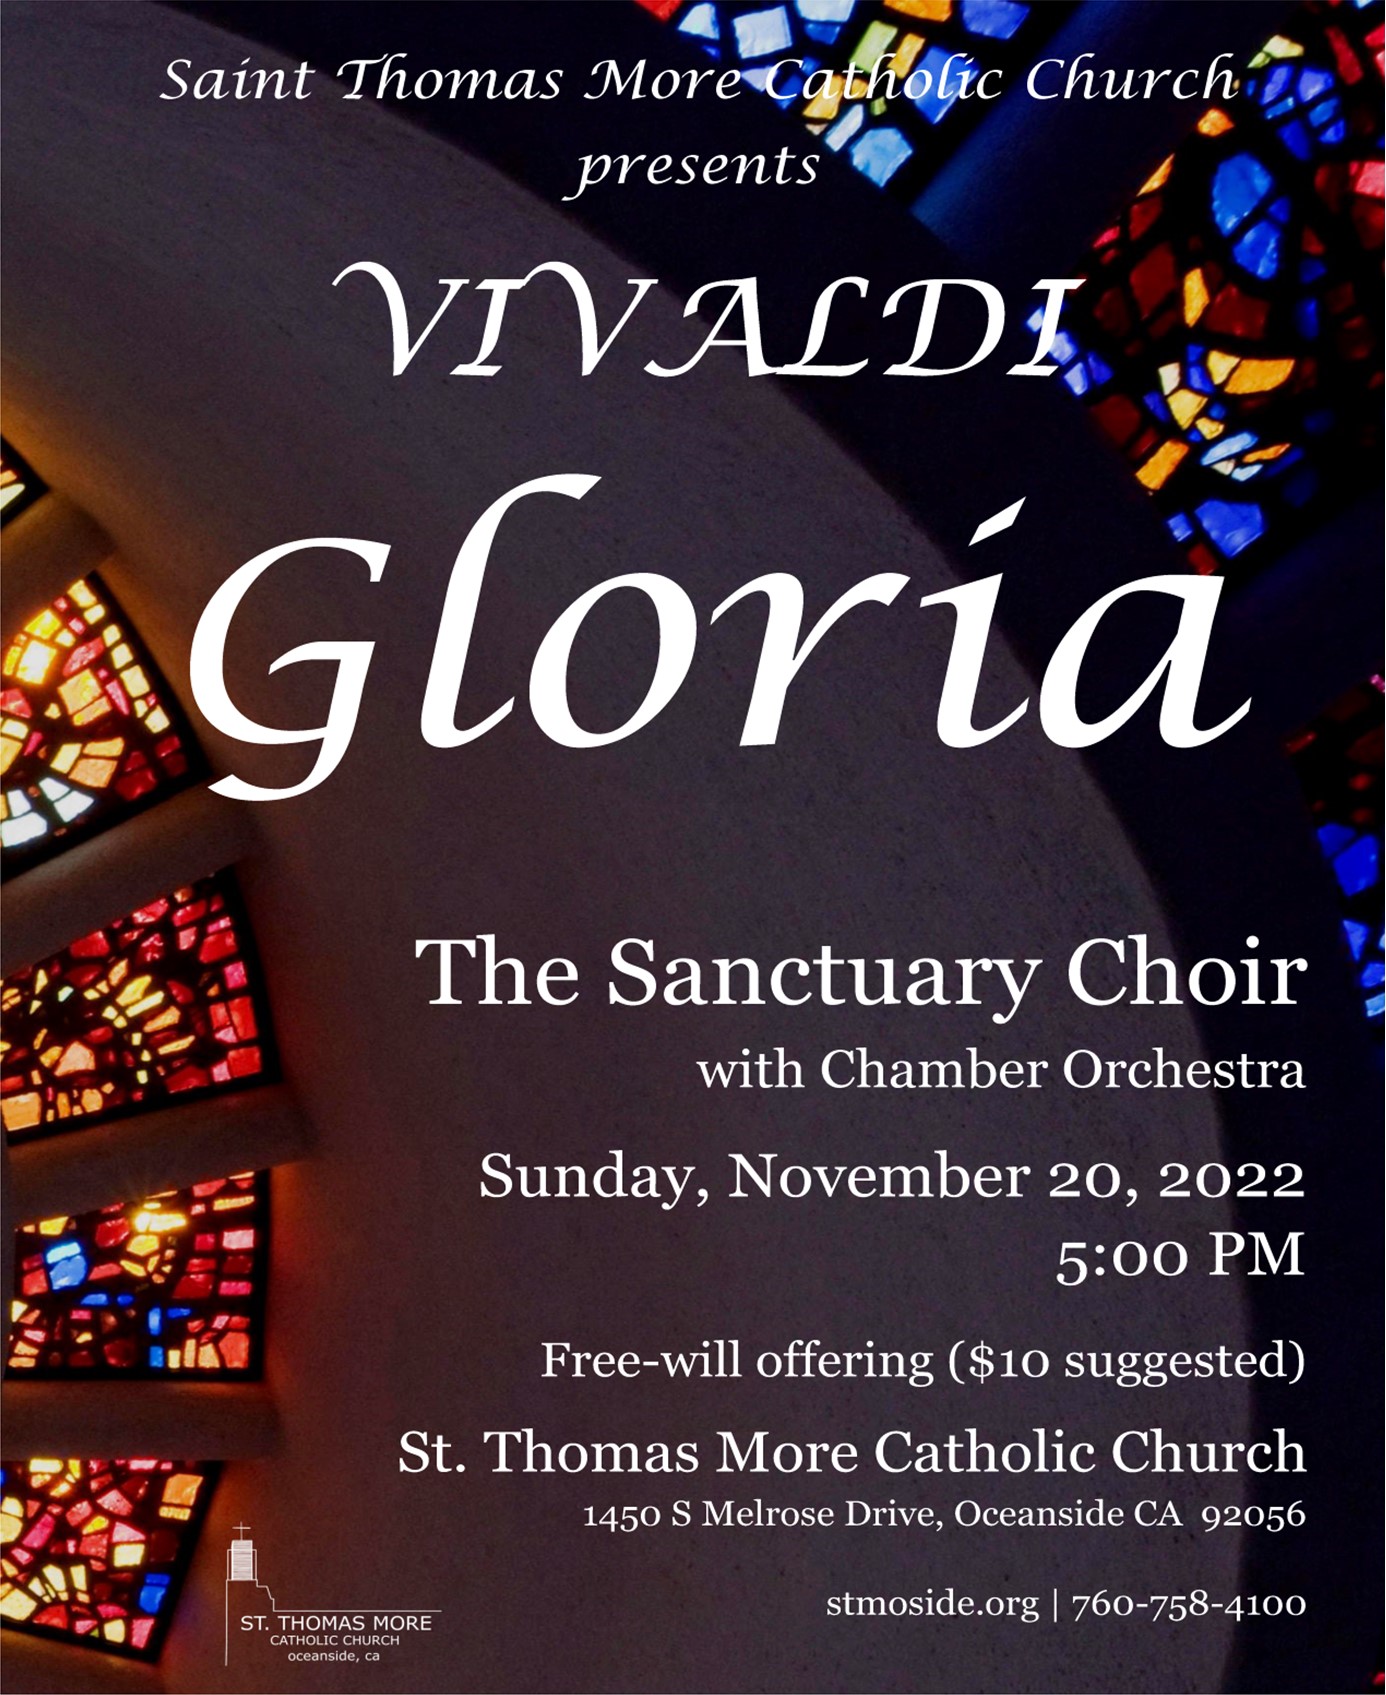 Vivaldi Gloria Choral Concert – November 20 at 5:00pm